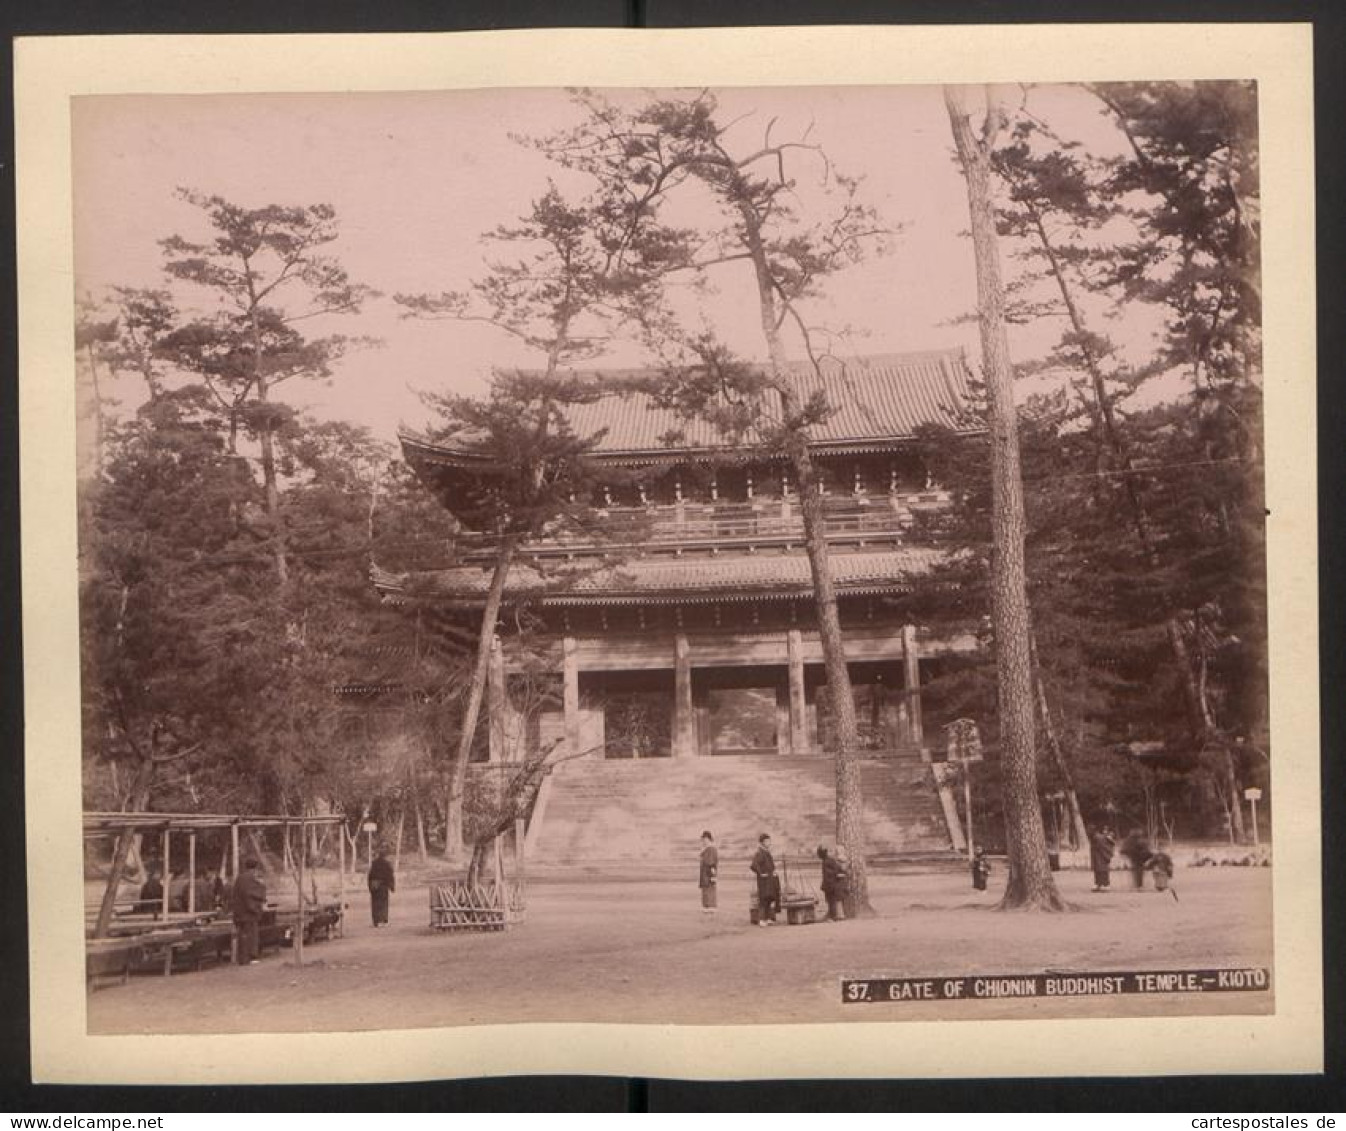 Fotoalbum mit 65 Fotografien, Ansicht Kioto, Tracht, Geisha, Tempel, Daibutsu, Nikko, Kobe, Tokyo 